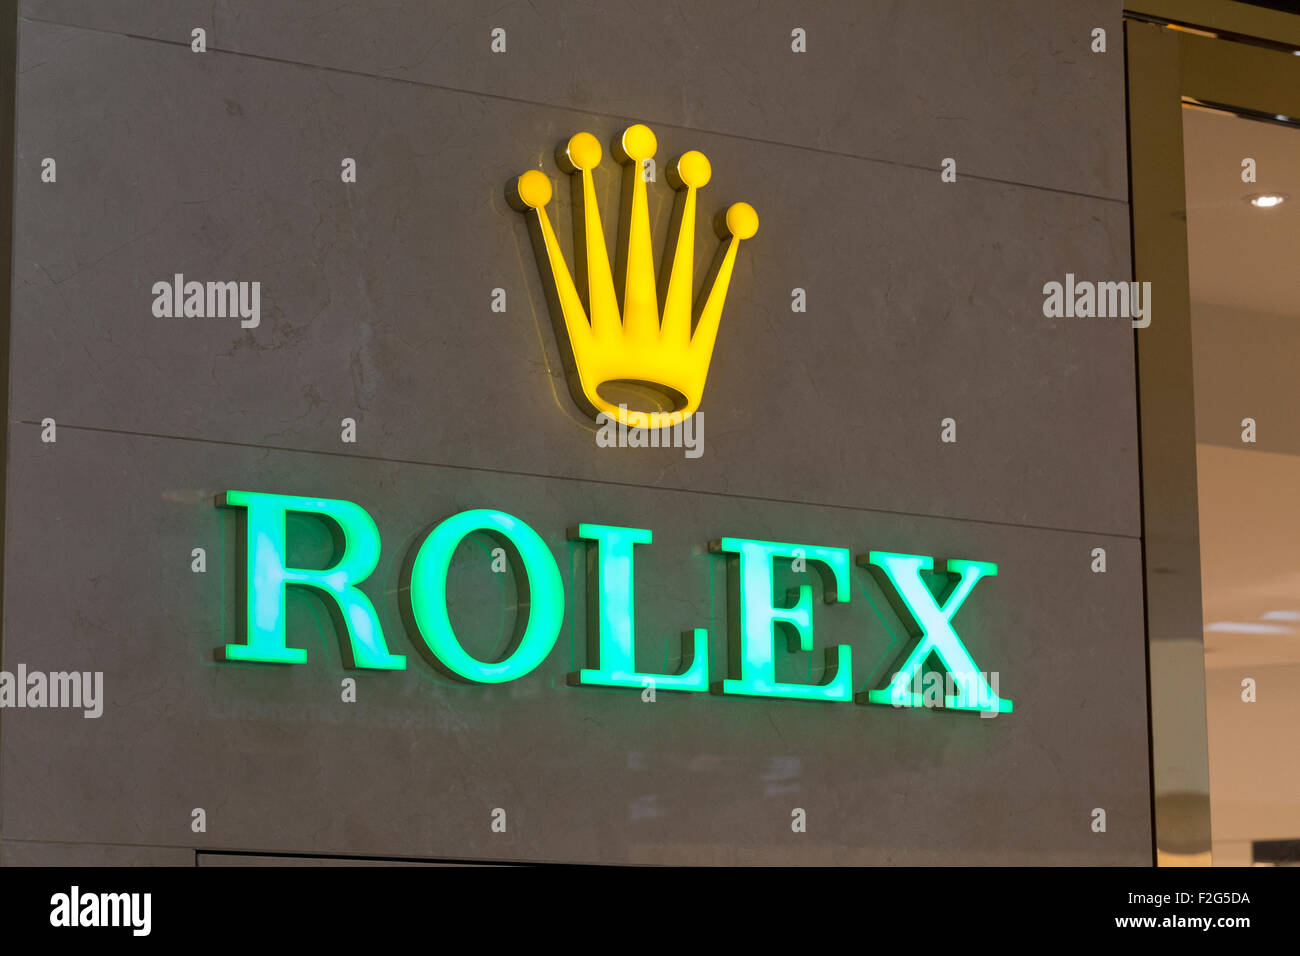 Rolex logo Stock Photo